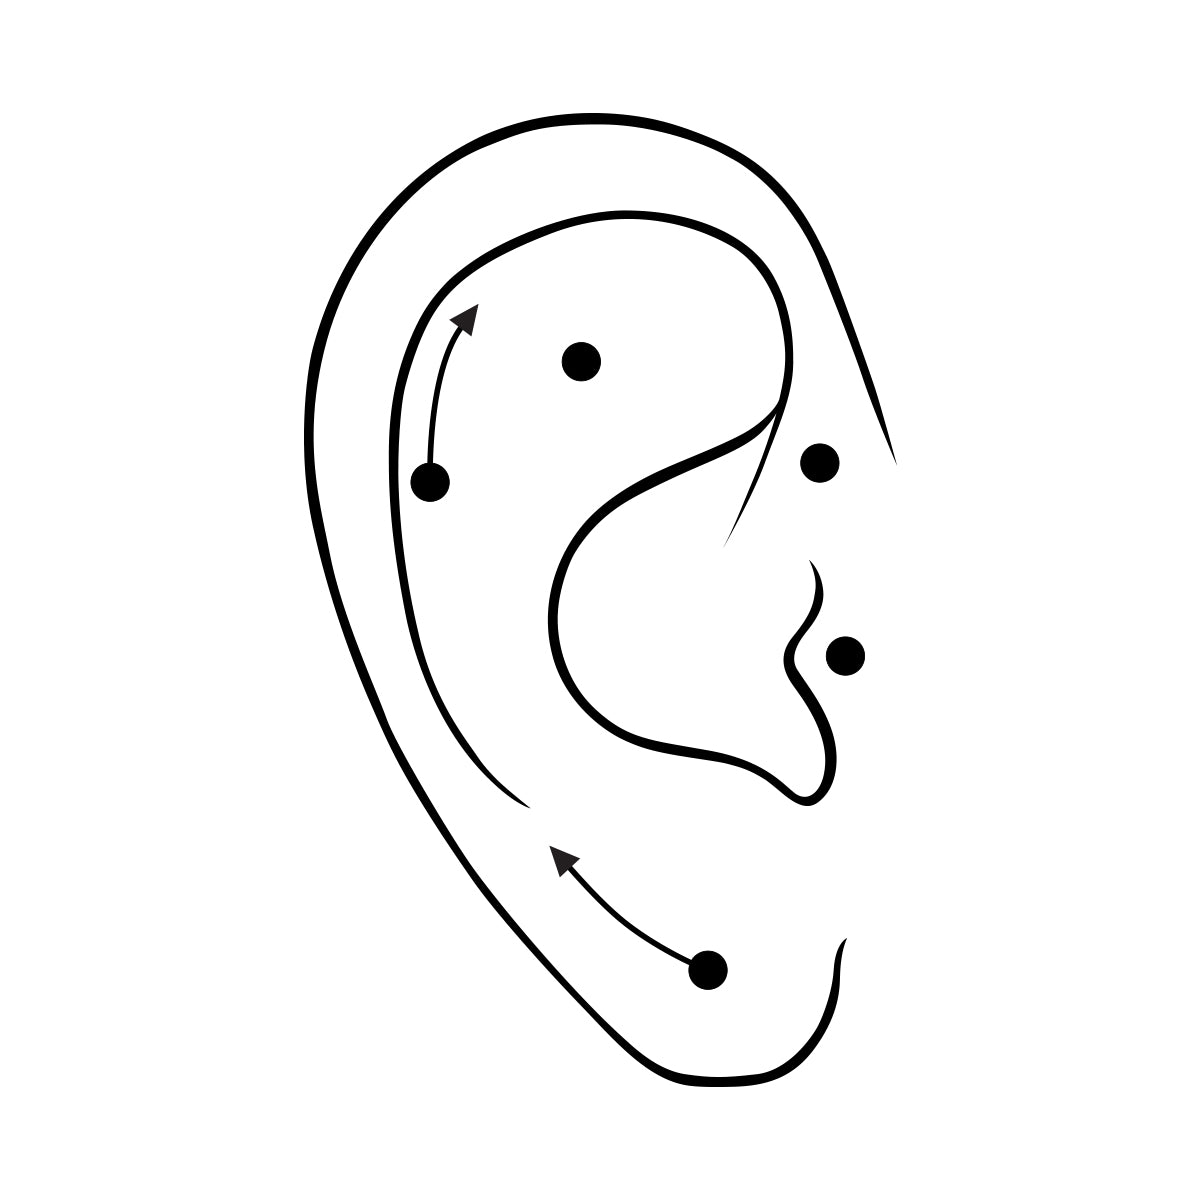 Gold steel ear piercing with boho designs